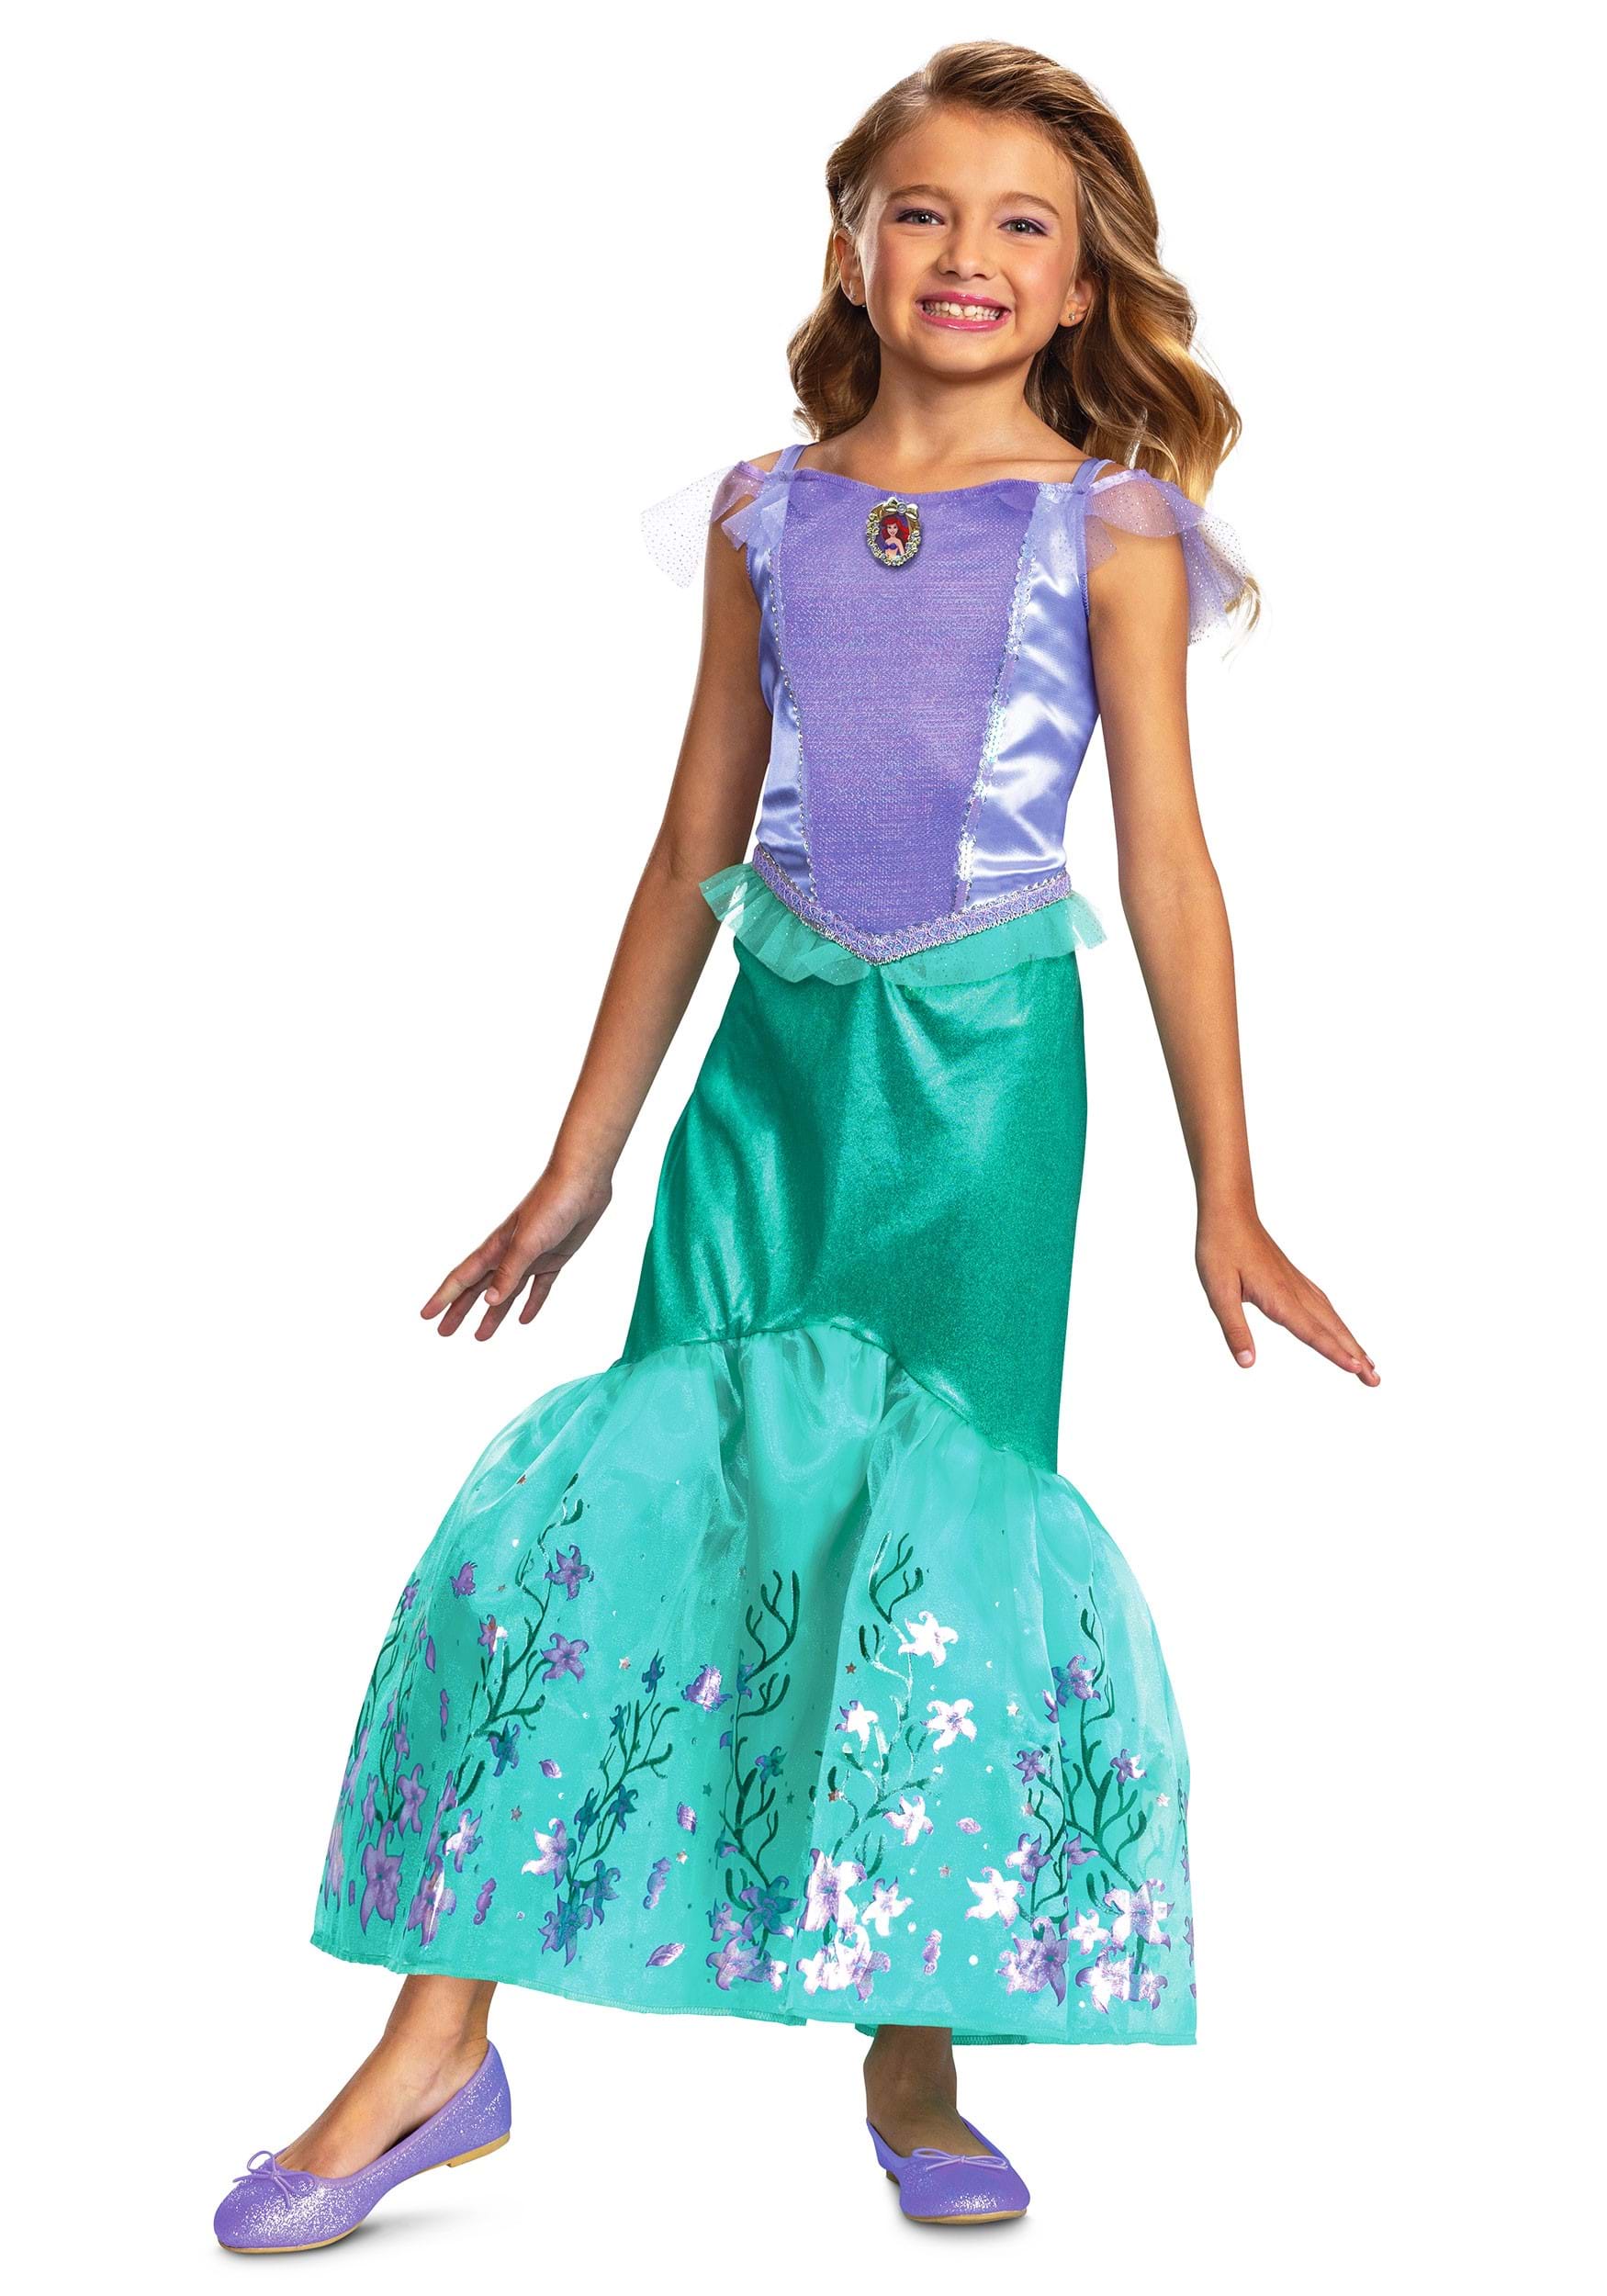 Image of Little Mermaid Child Deluxe Ariel Costume Dress | Disney Princess Costumes ID DI117859-3T/4T